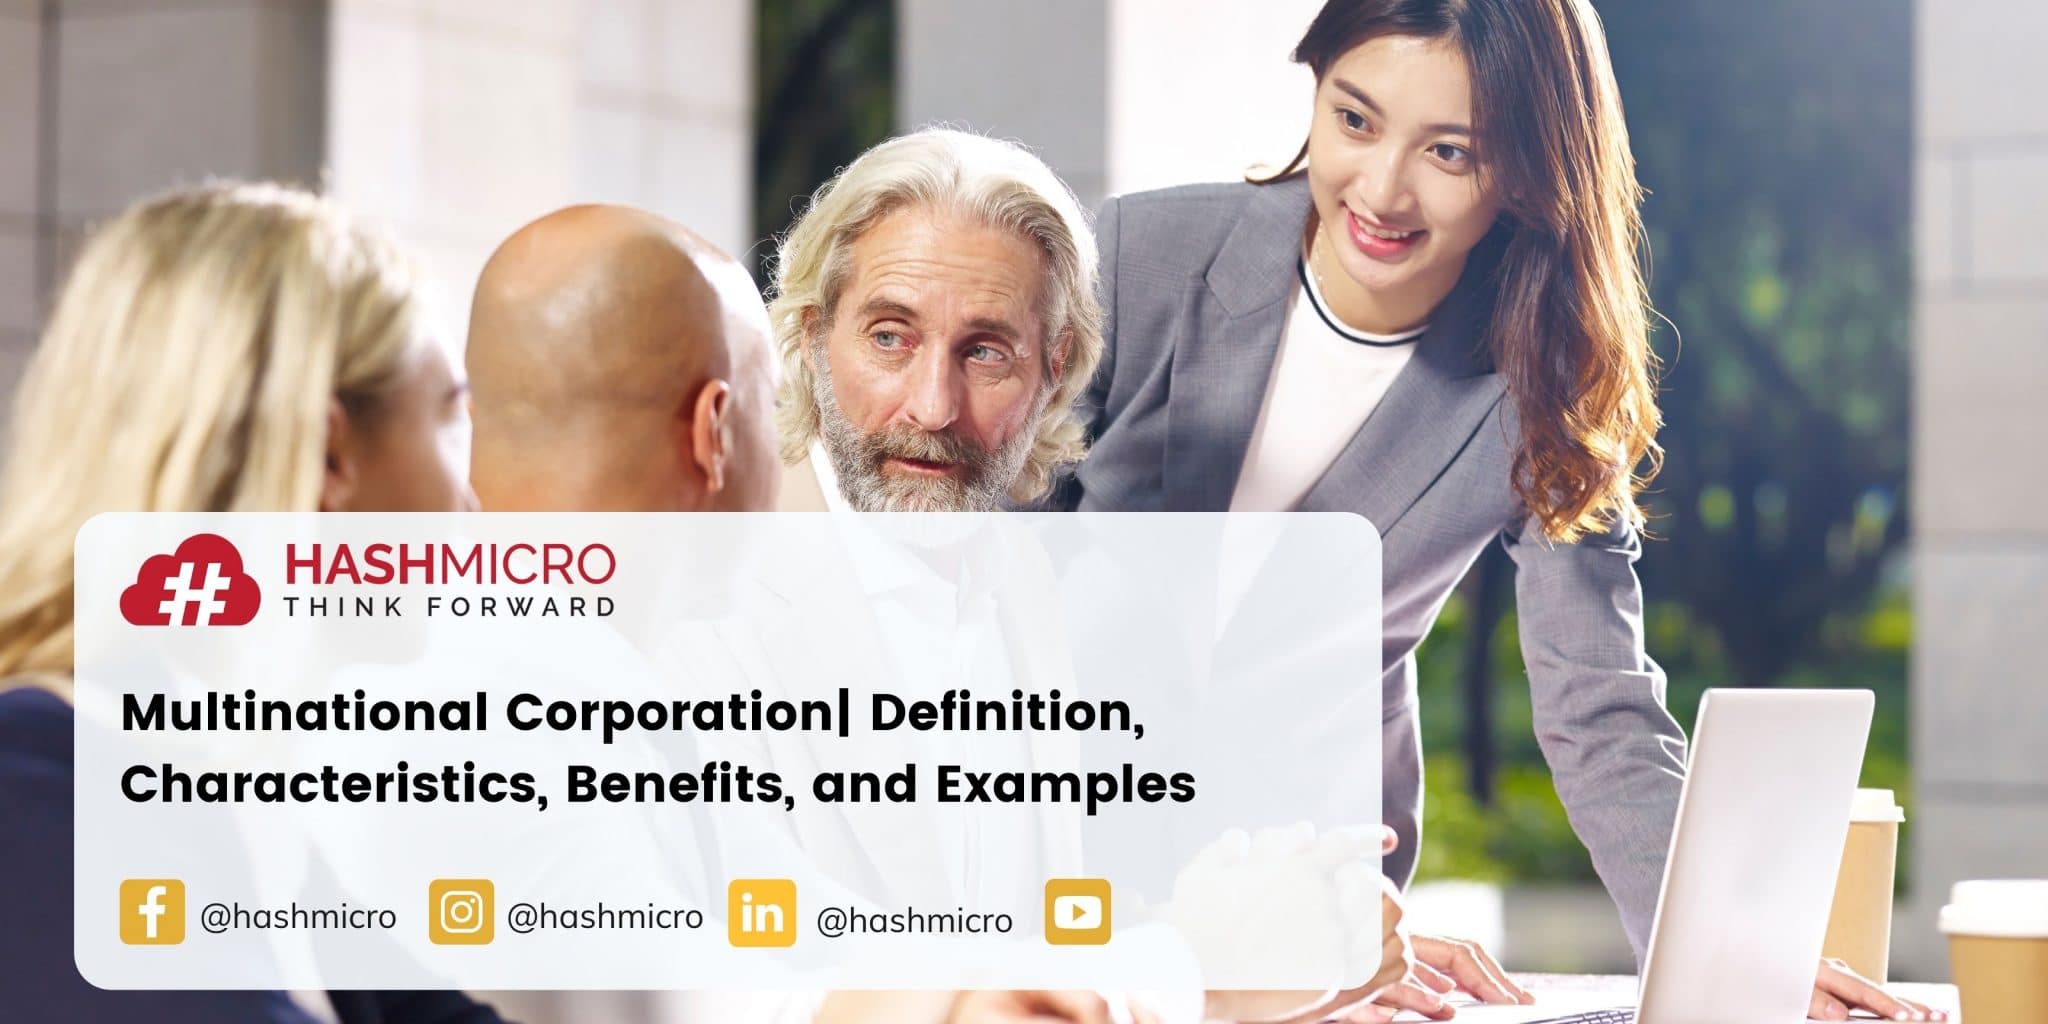 Multinational Corporation| Definition, Characteristics, and Benefits